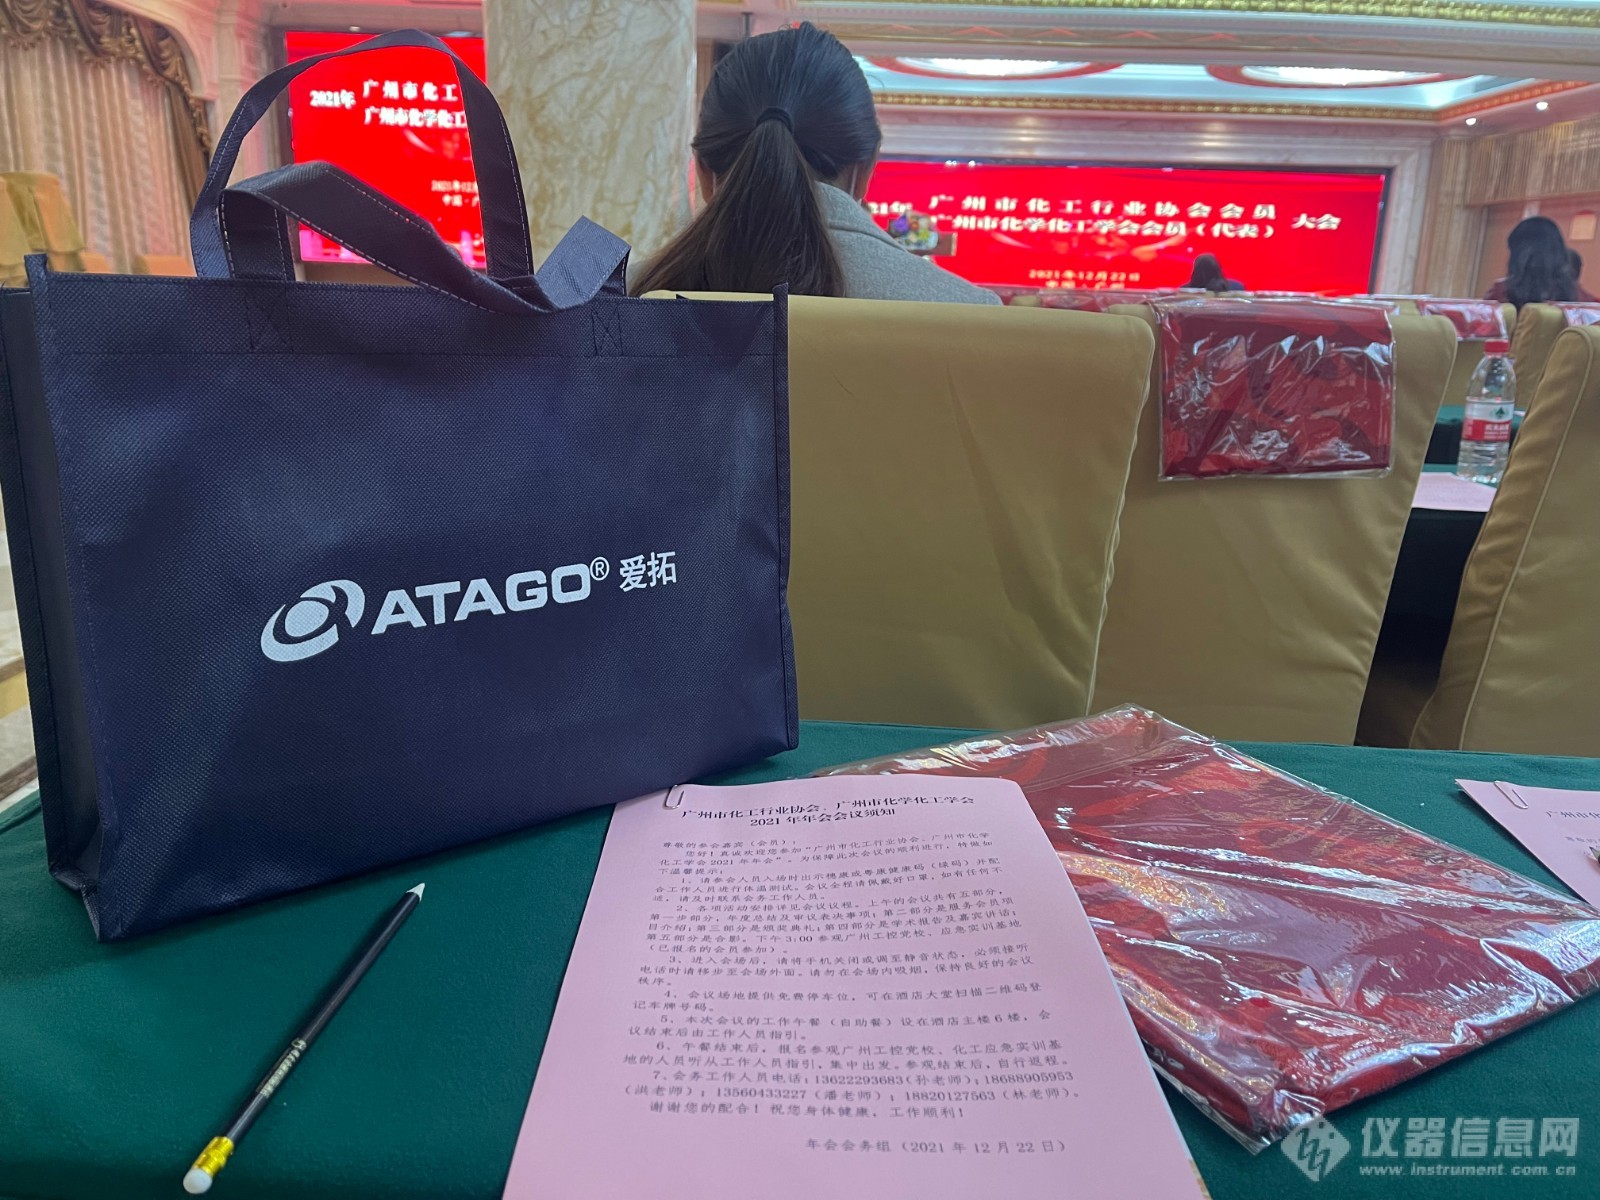 ATAGO爱拓出席2021广州化工行业协会会员大会2021-12-22 (11).JPG